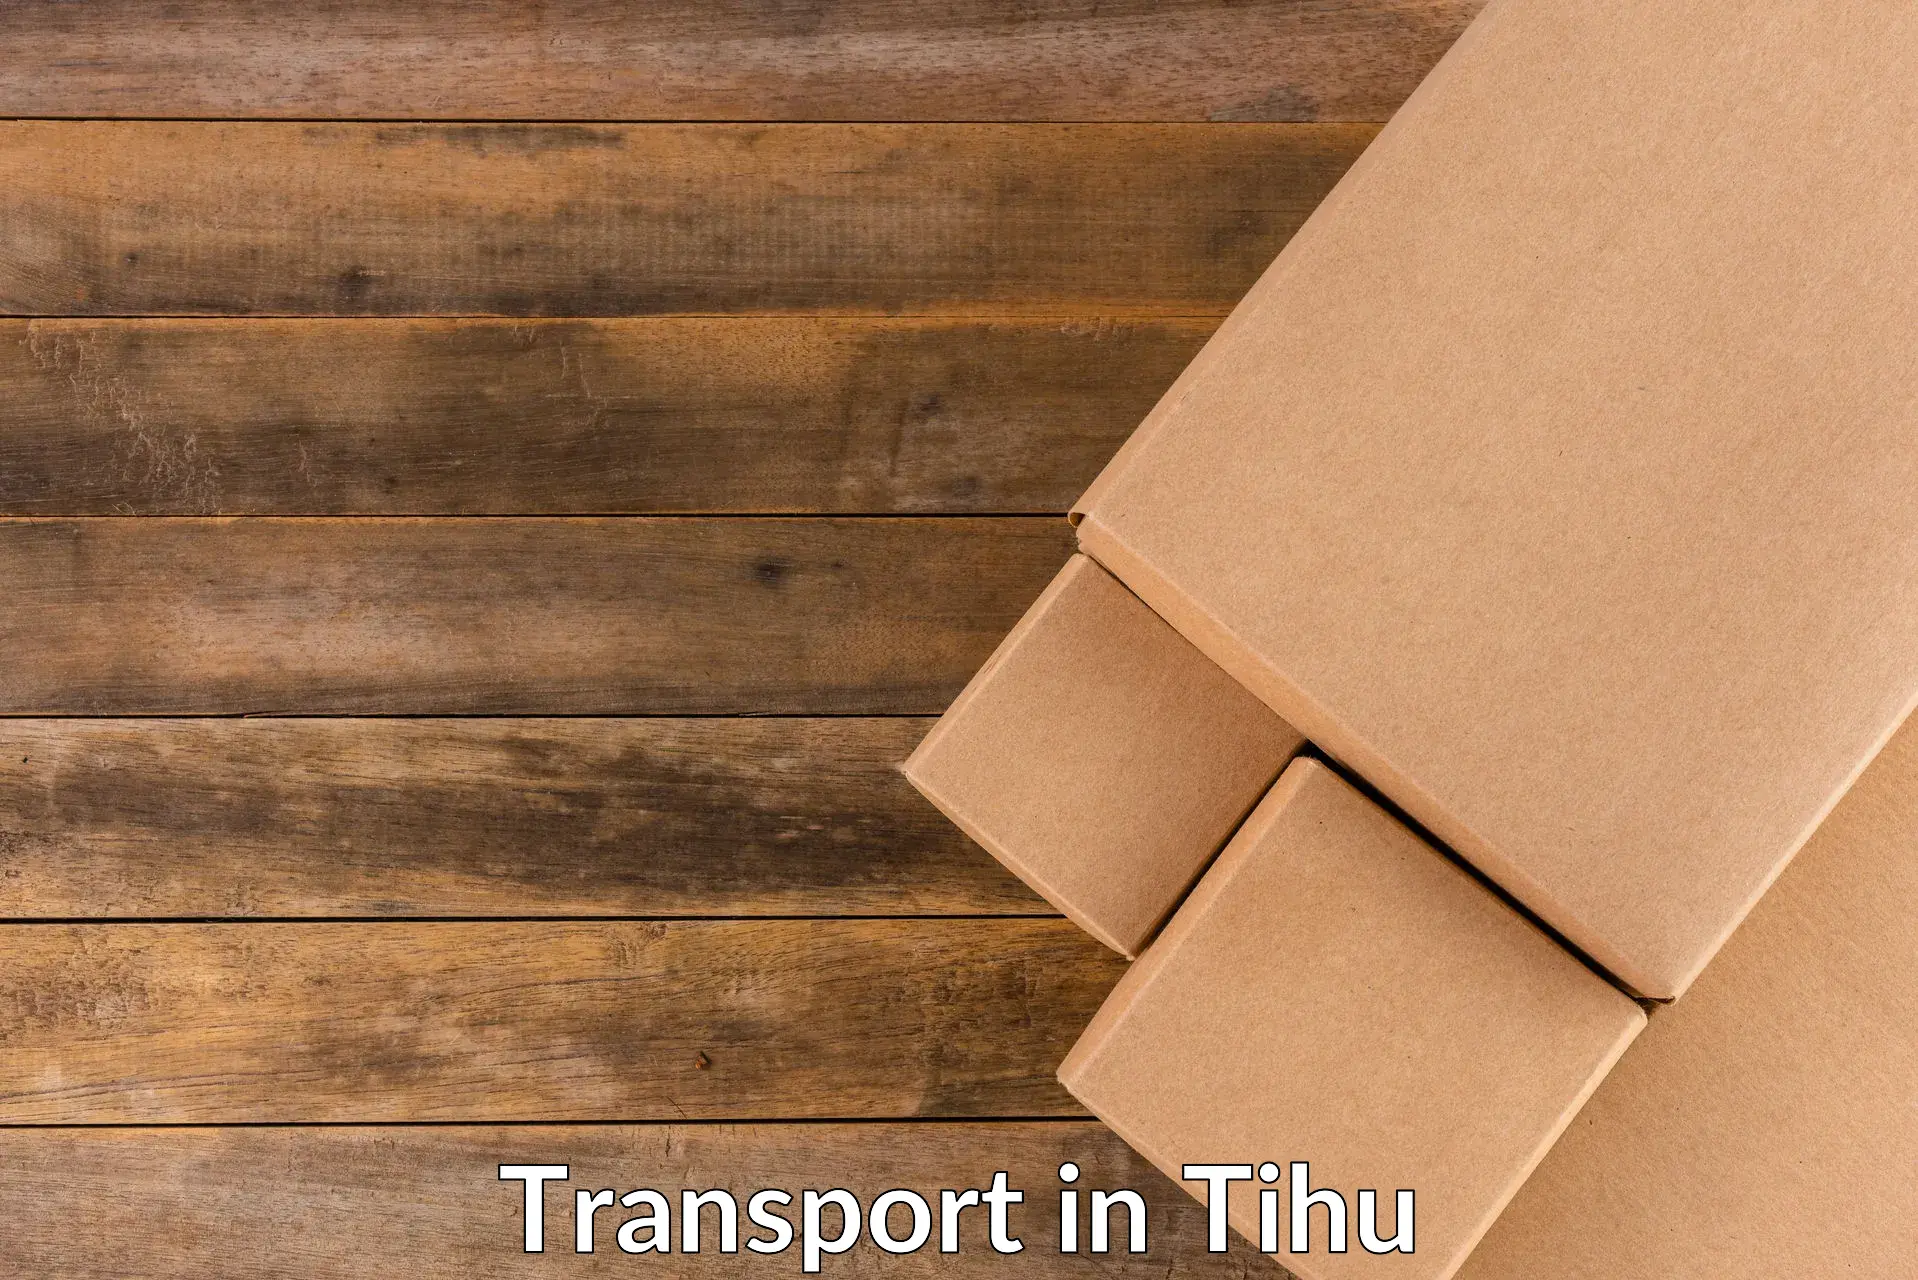 Transportation services in Tihu